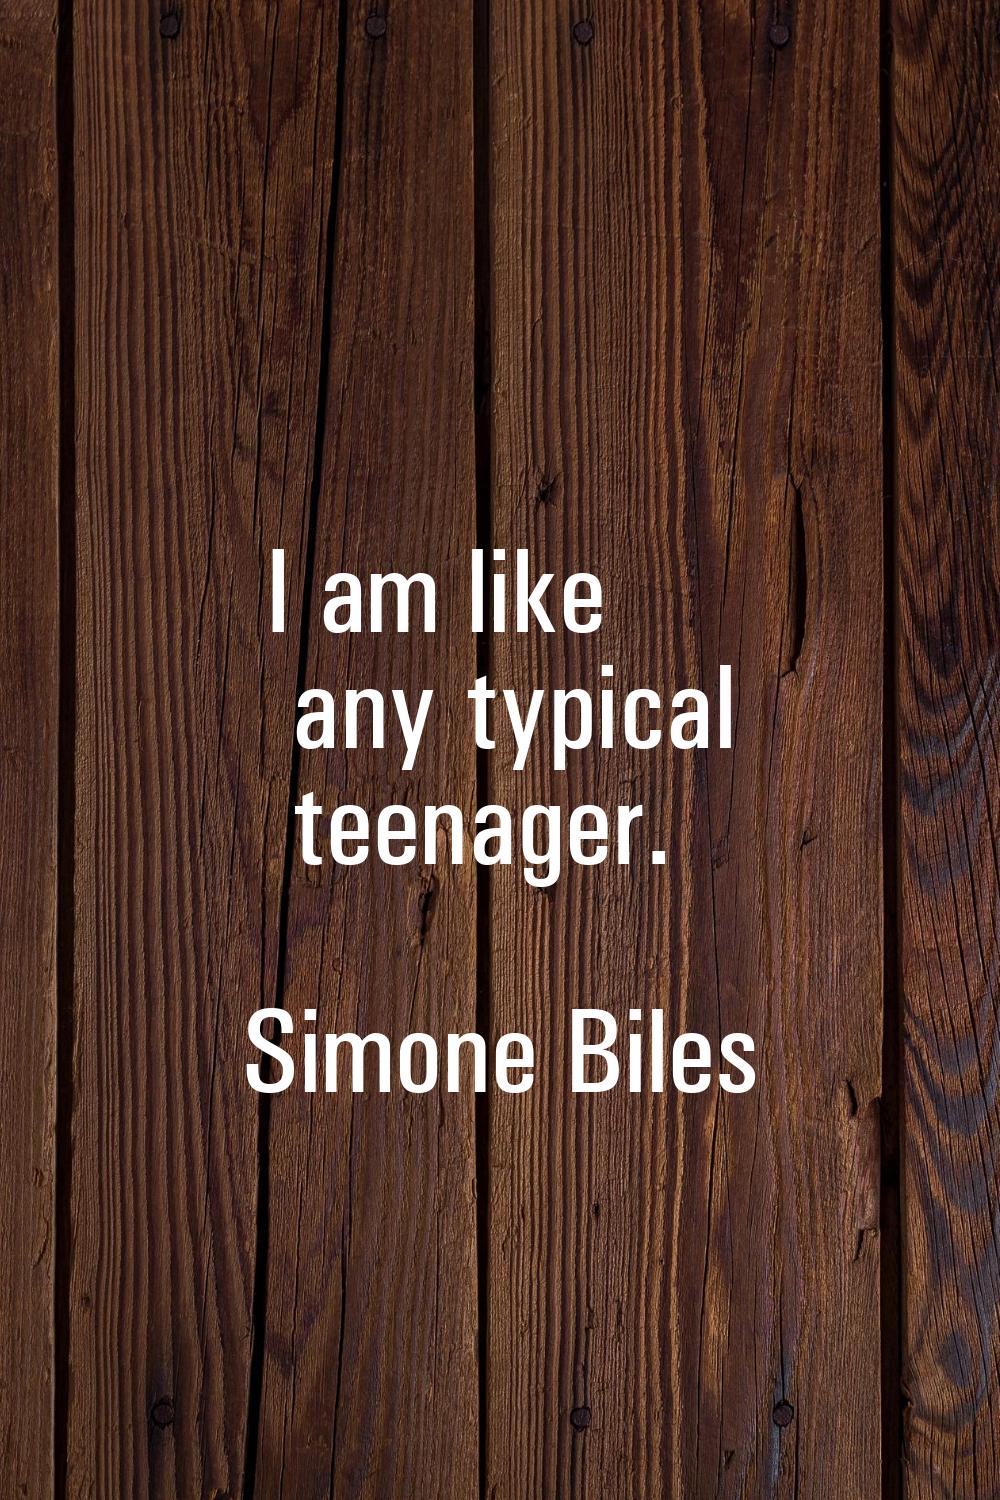 I am like any typical teenager.